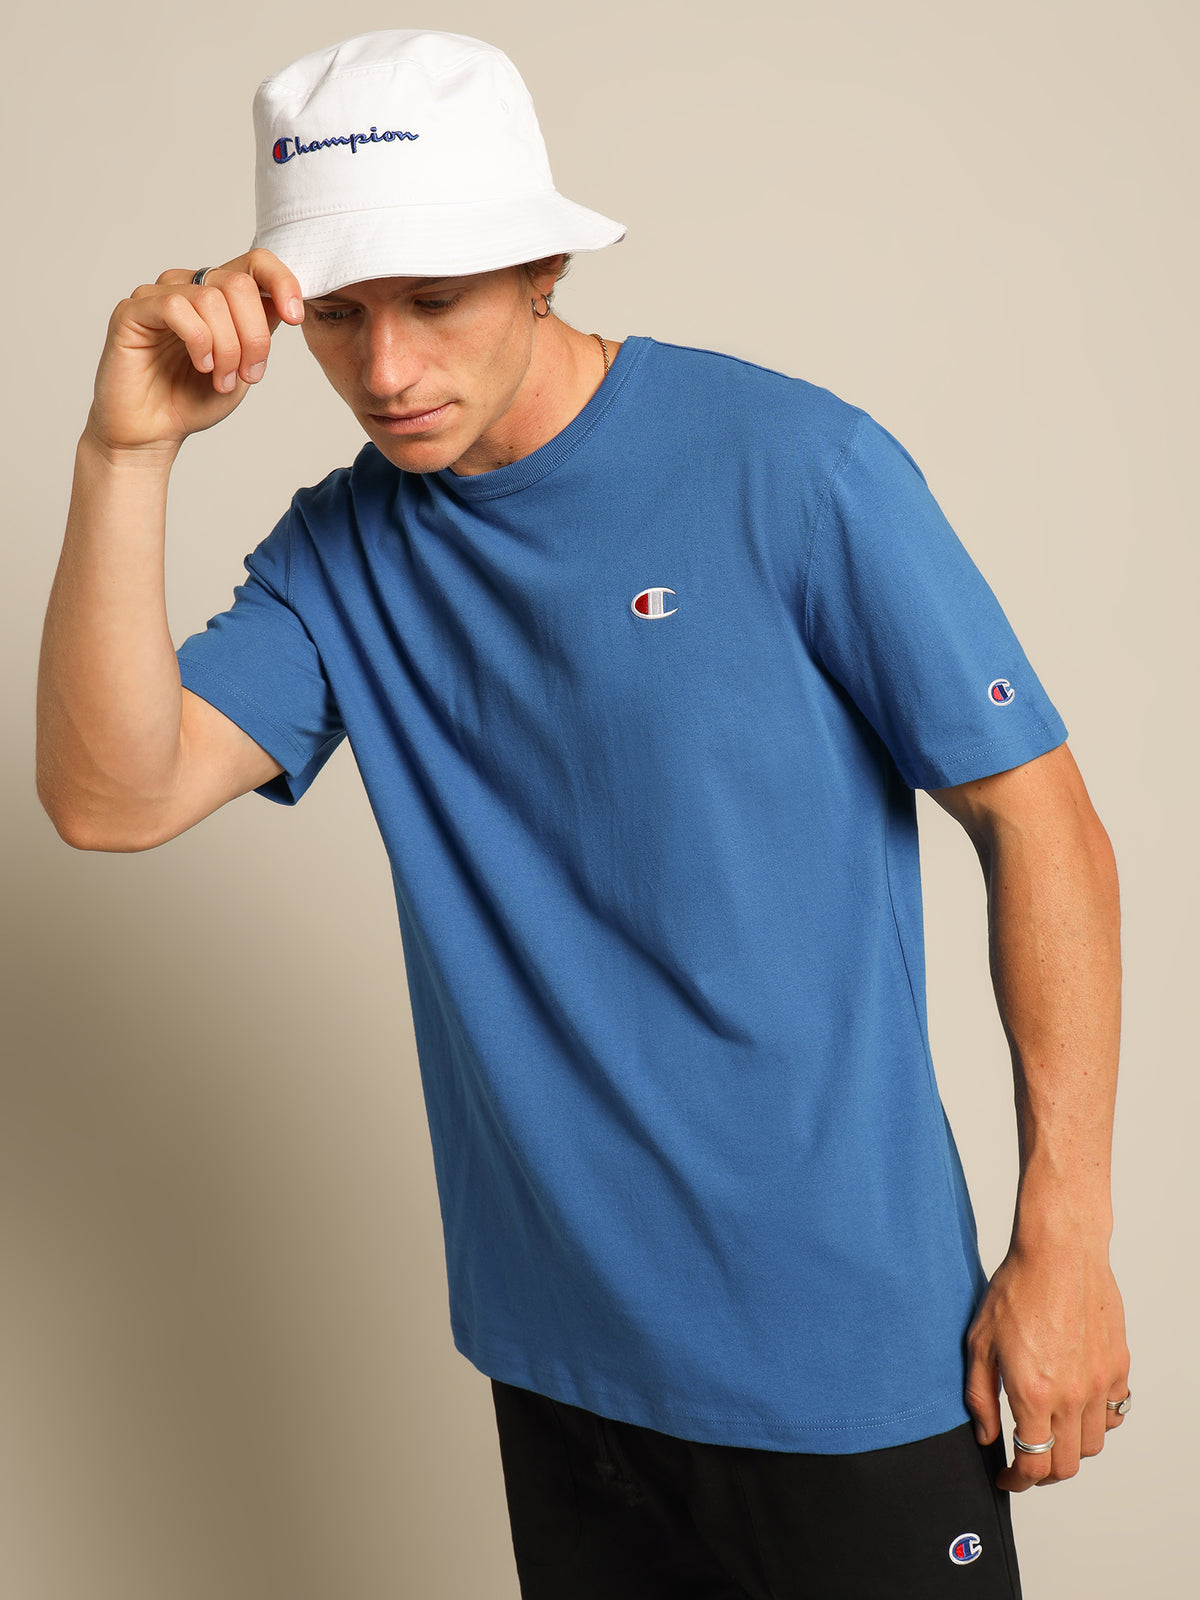 Re:bound Lightweight T-Shirt in Living In Blue